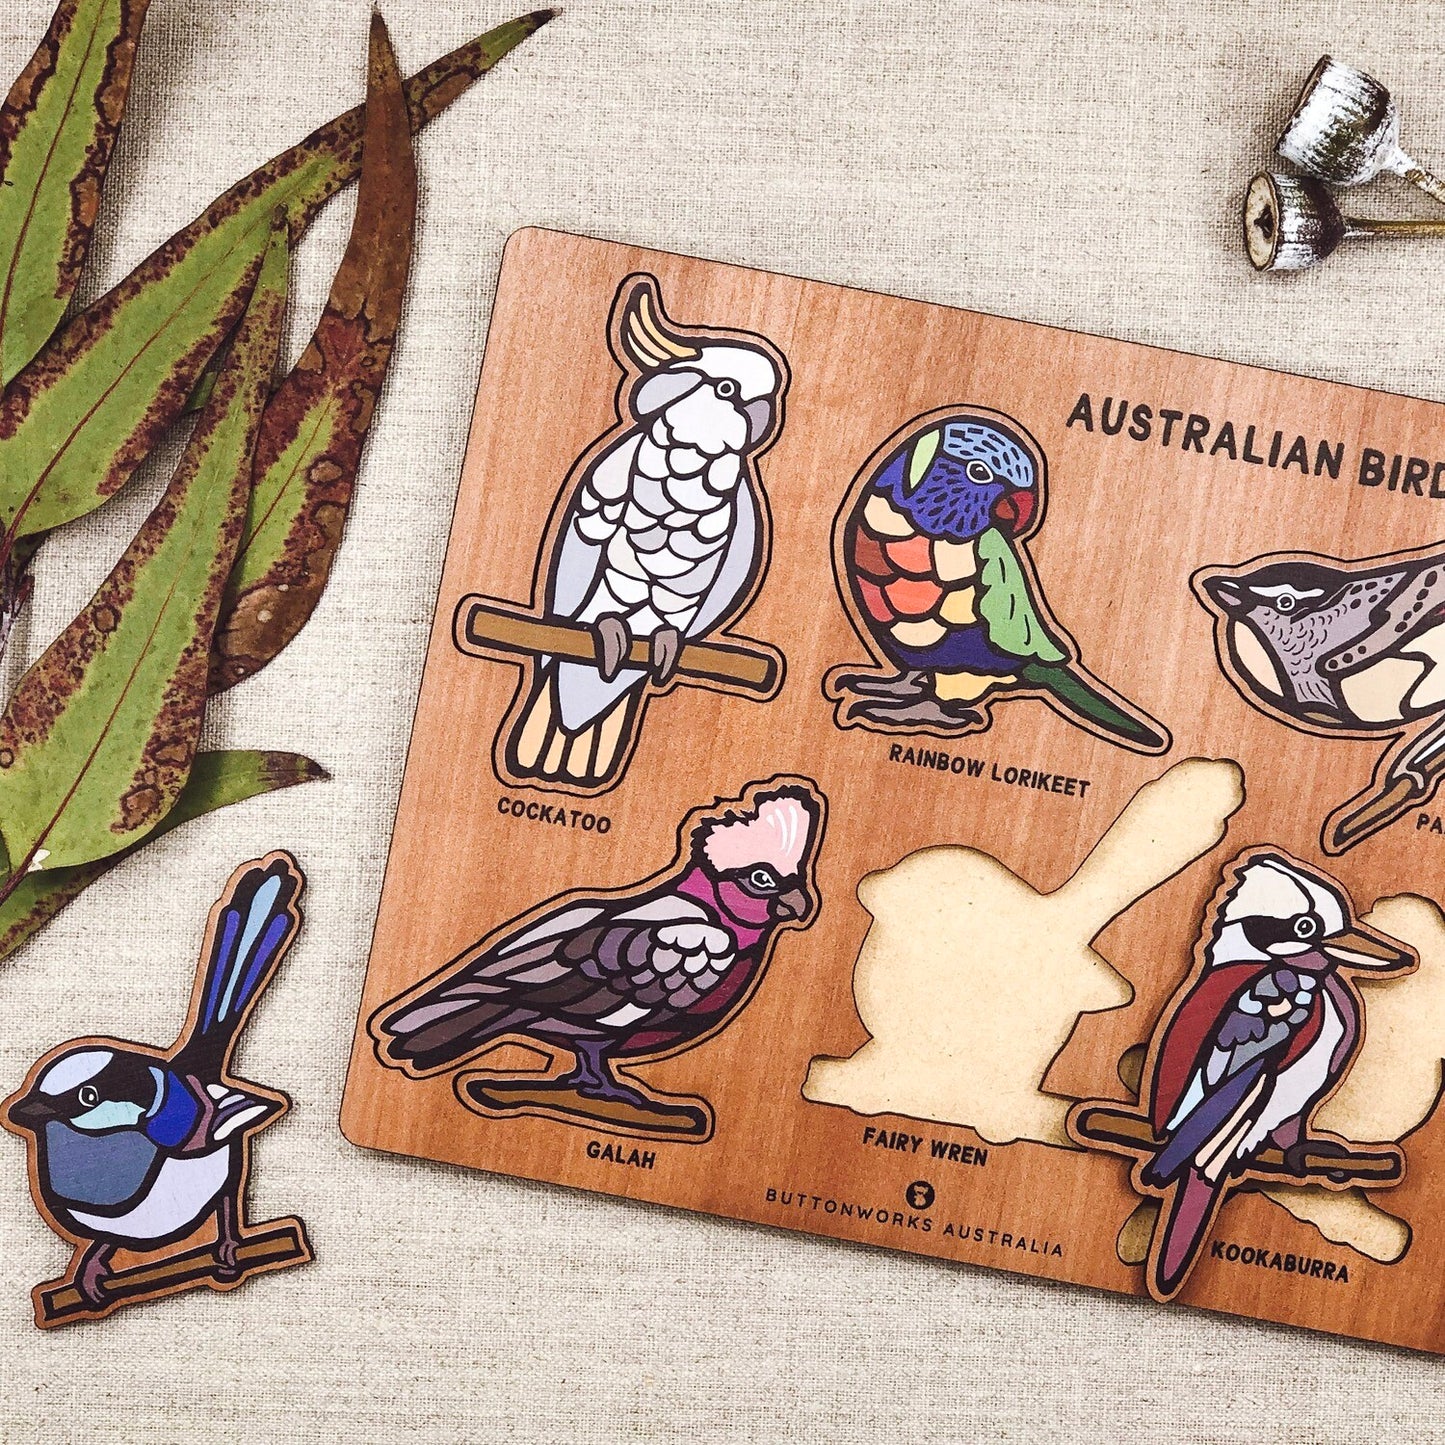 Puzzle Australian Birds